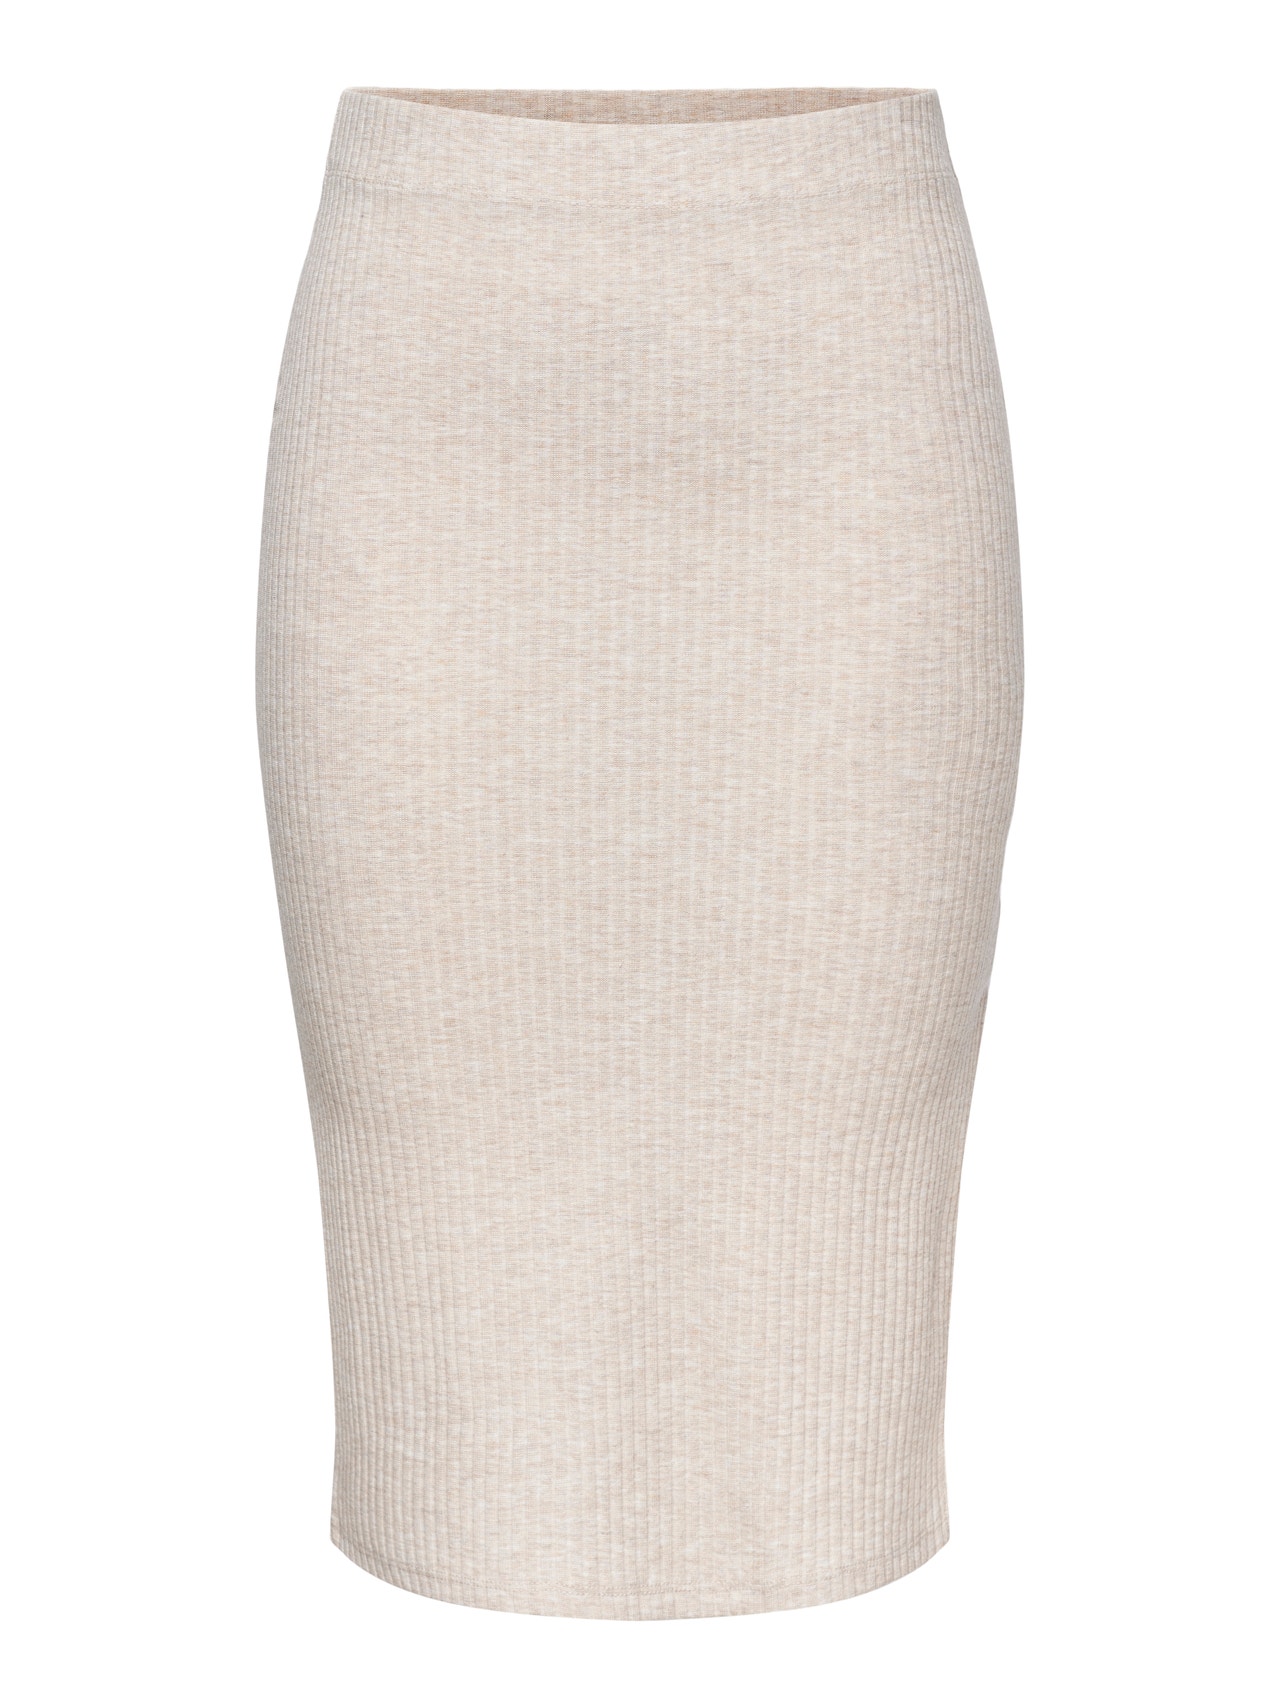 ONLY Midi nederdel med slids -Pumice Stone - 15233600